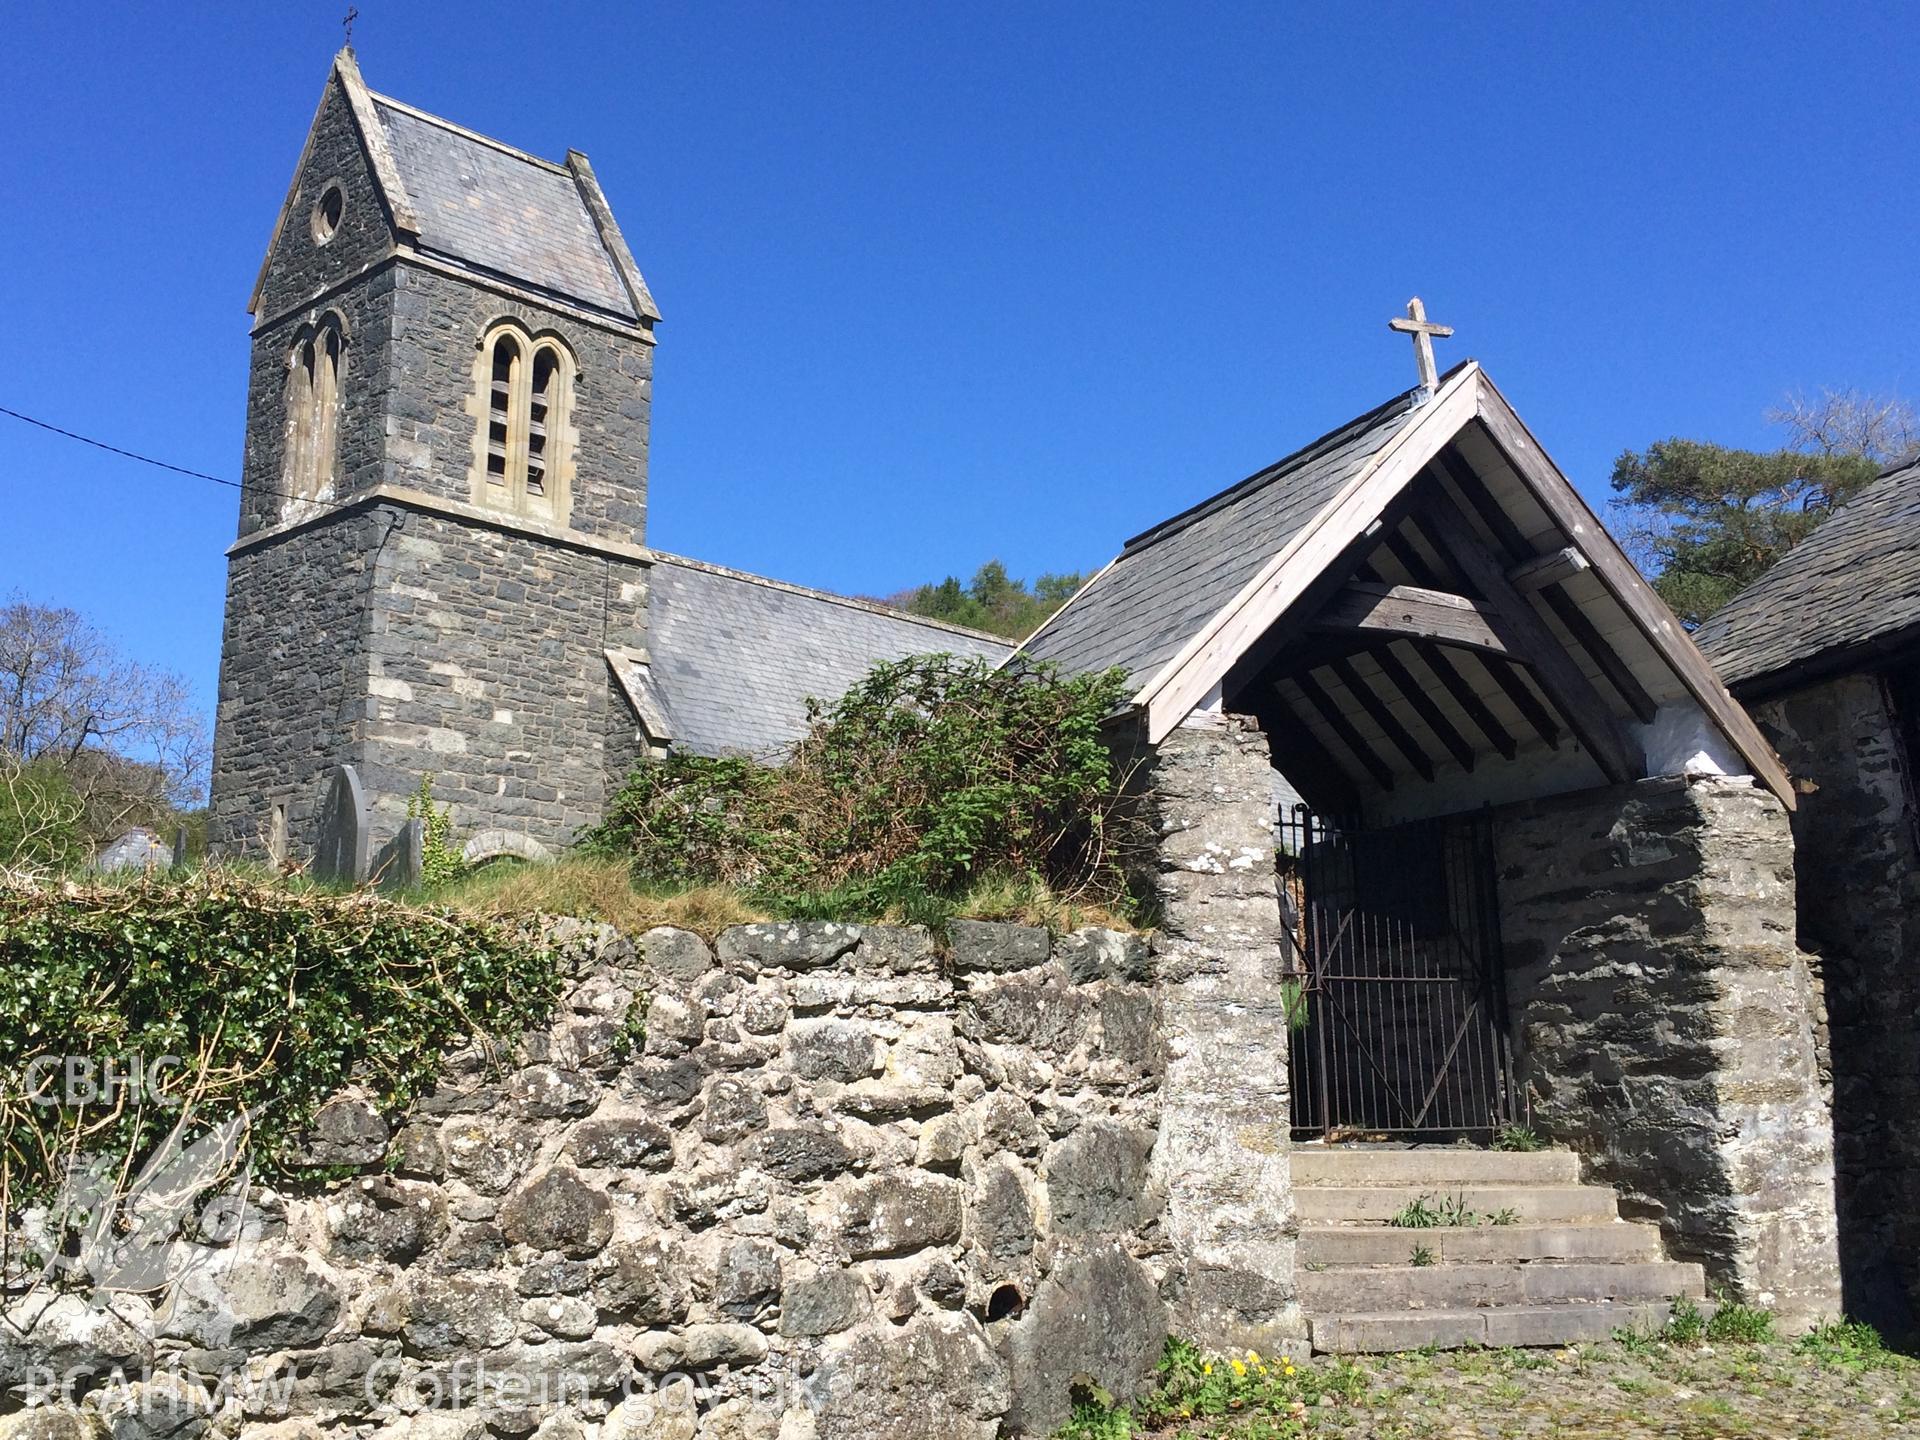 Colour photo showing Llanfor Church,  produced by Paul R. Davis, 22nd April 2017.